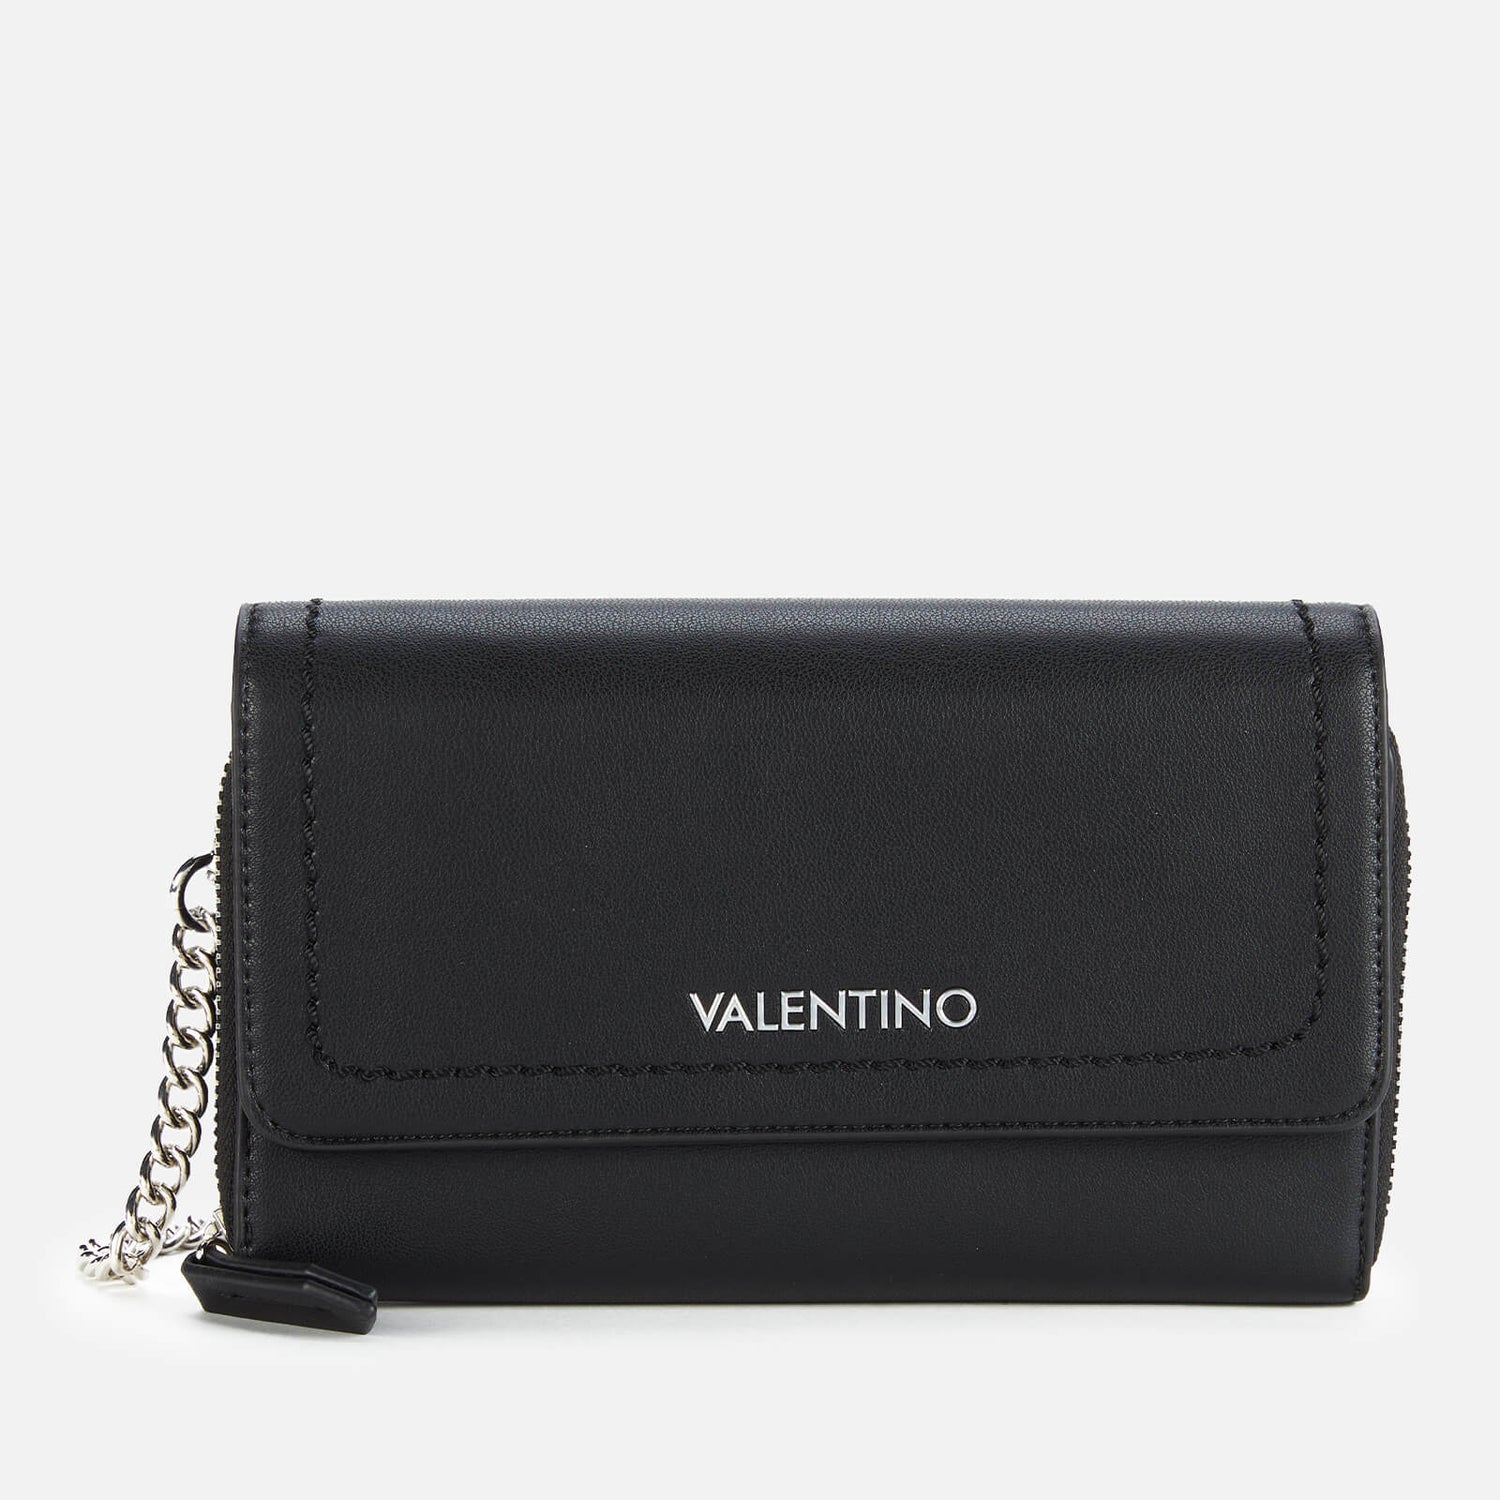 Valentino Bags Women's Elm Chain Cross Body Bag - Black